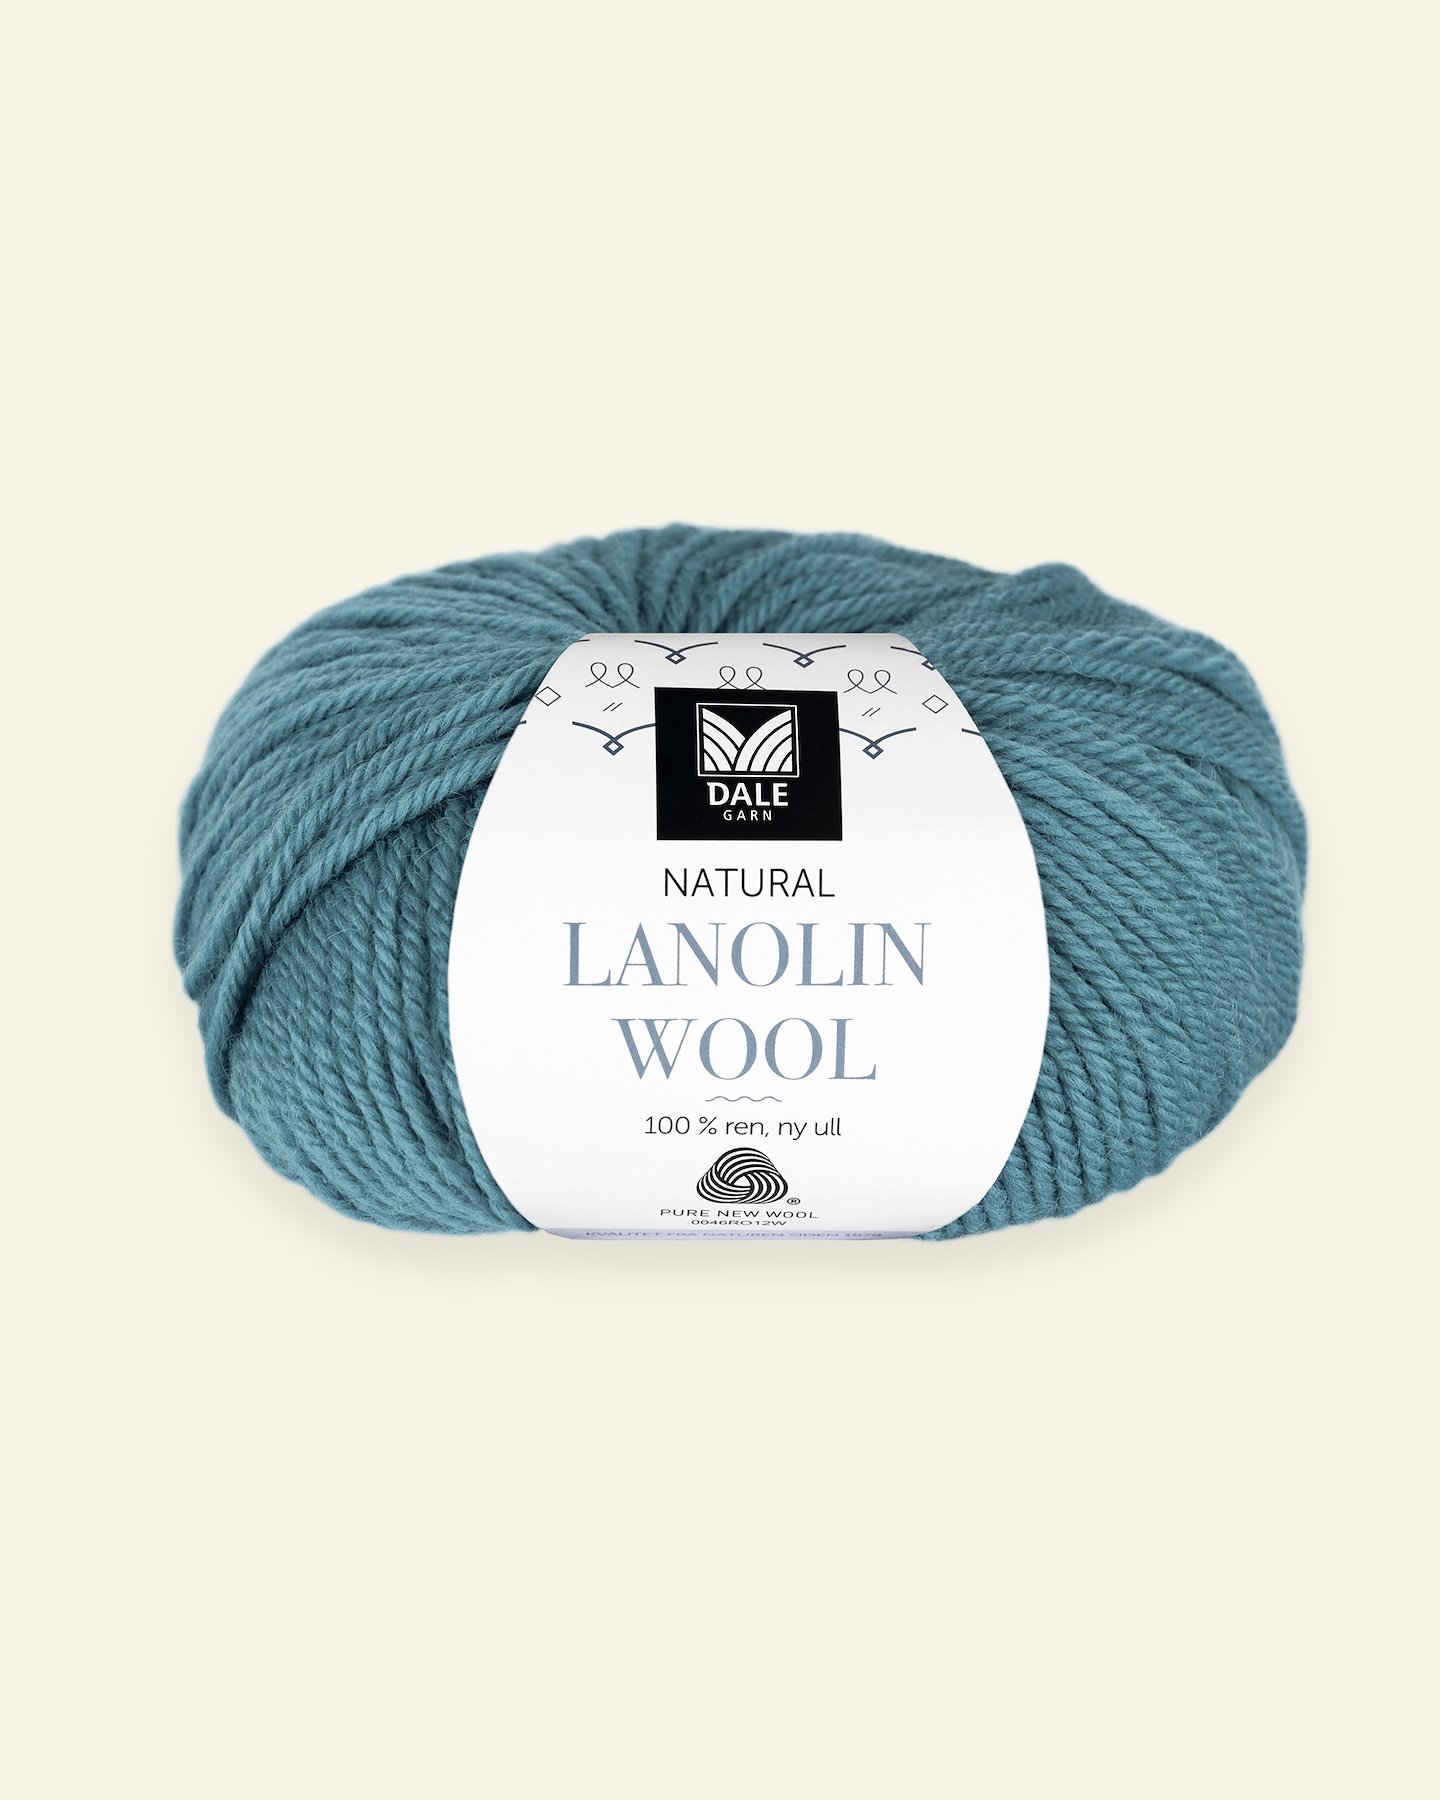 Dale Garn, 100% wool yarn "Lanolin Wool", petrol 90000278_pack